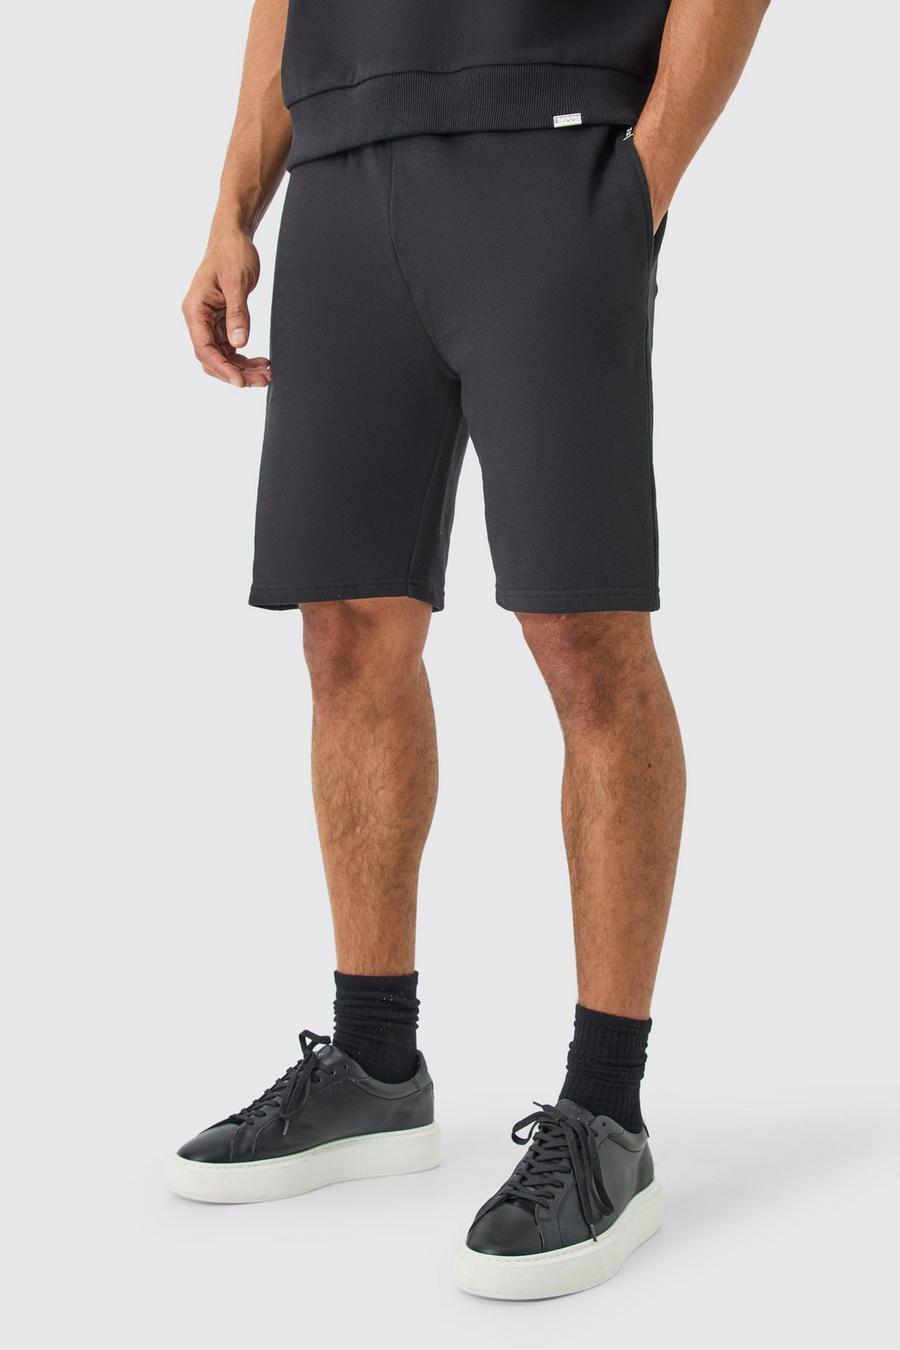 Black Mellanlånga shorts i tjockt tyg med ledig passform